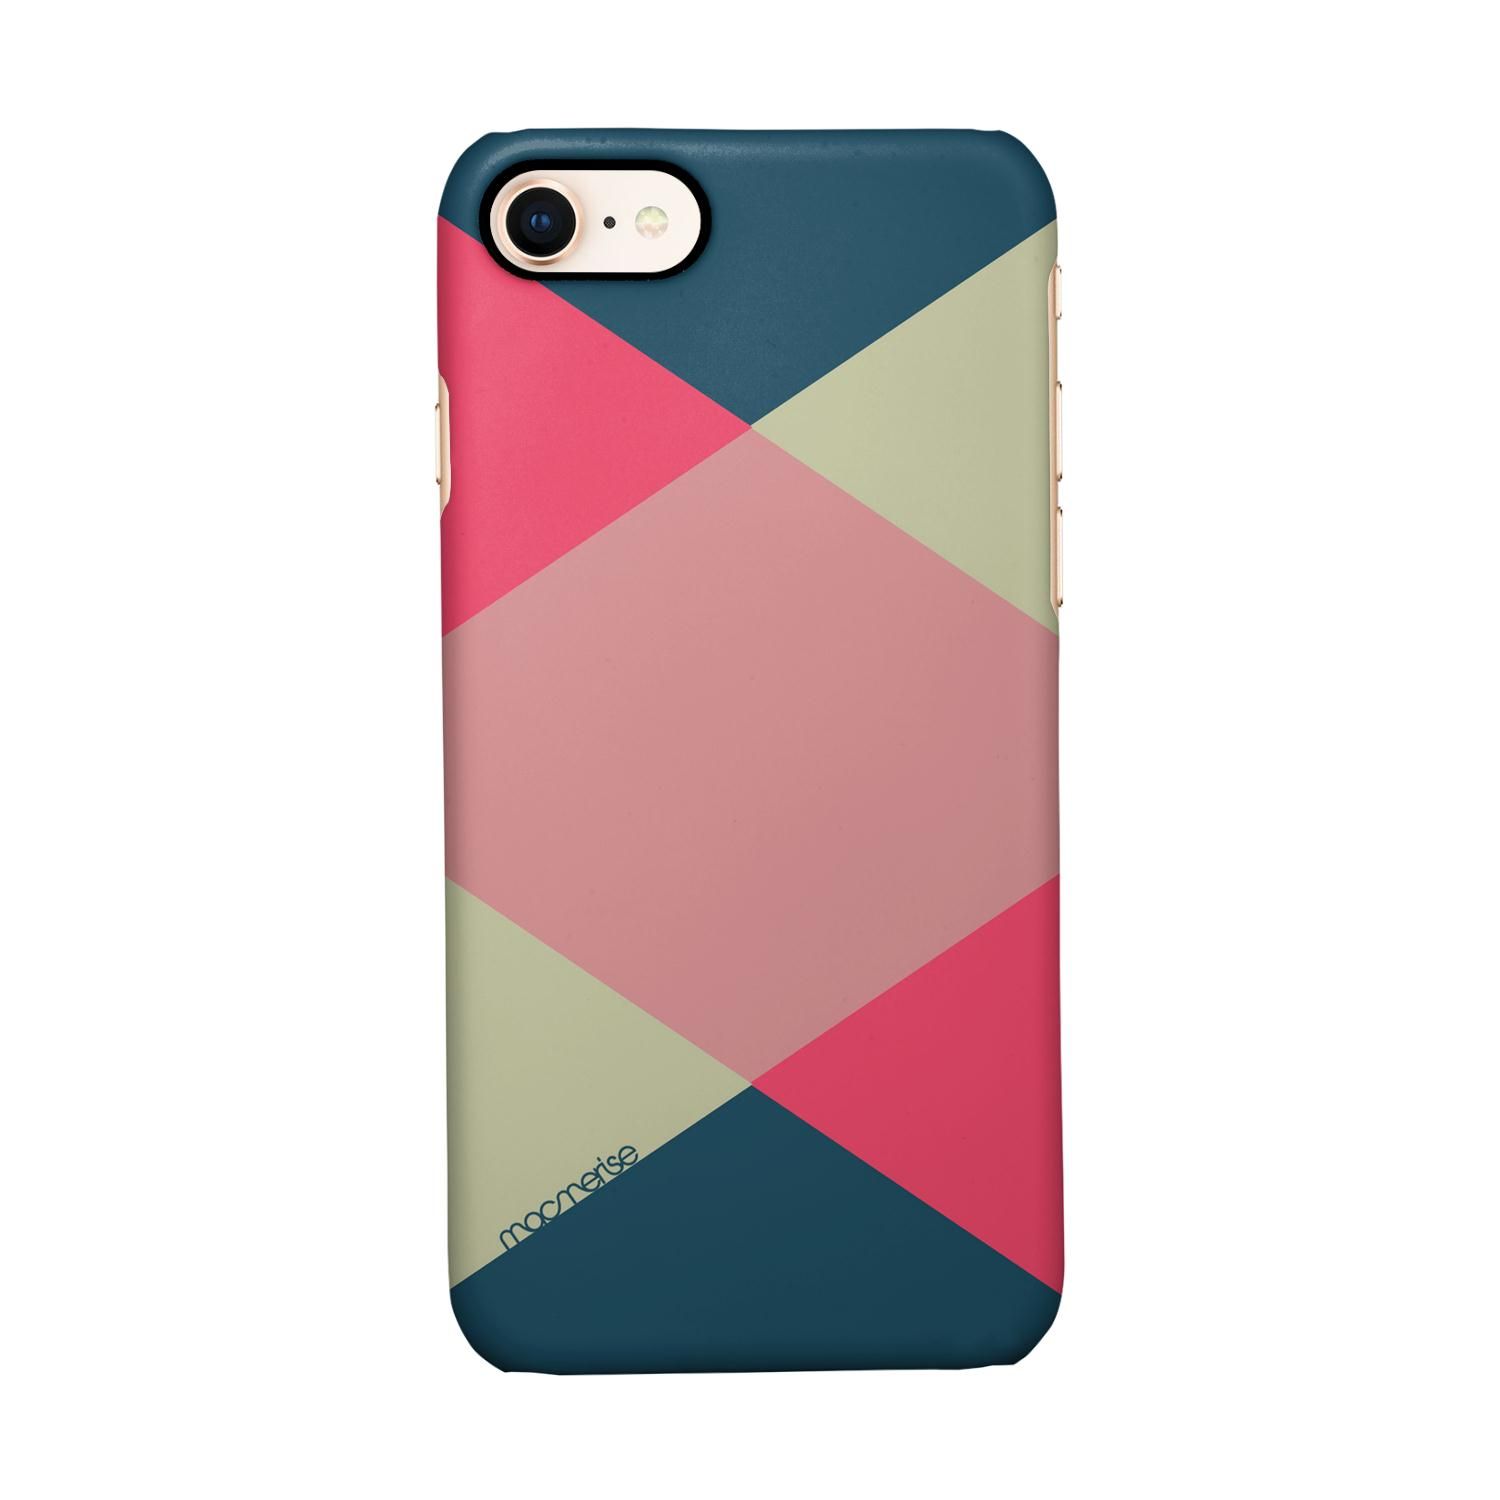 Buy Criss Cross Tealpink - Sleek Phone Case for iPhone 7 Online